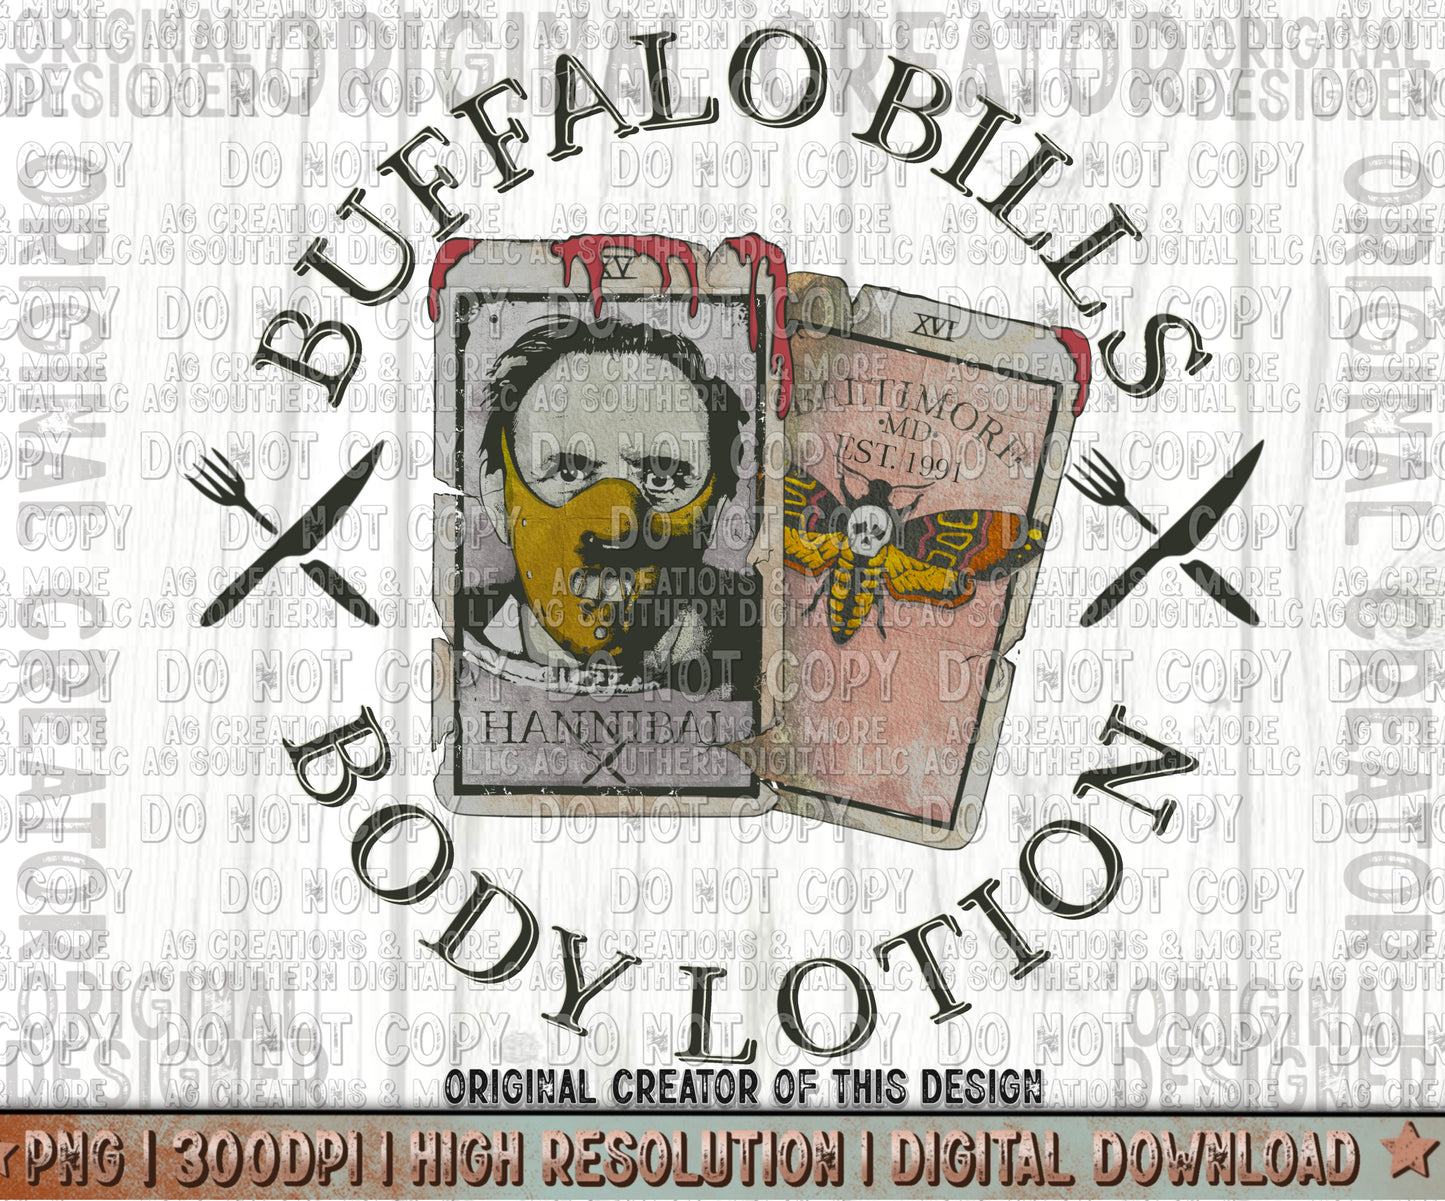 Buffalo Bills Body Lotion Digital Download PNG